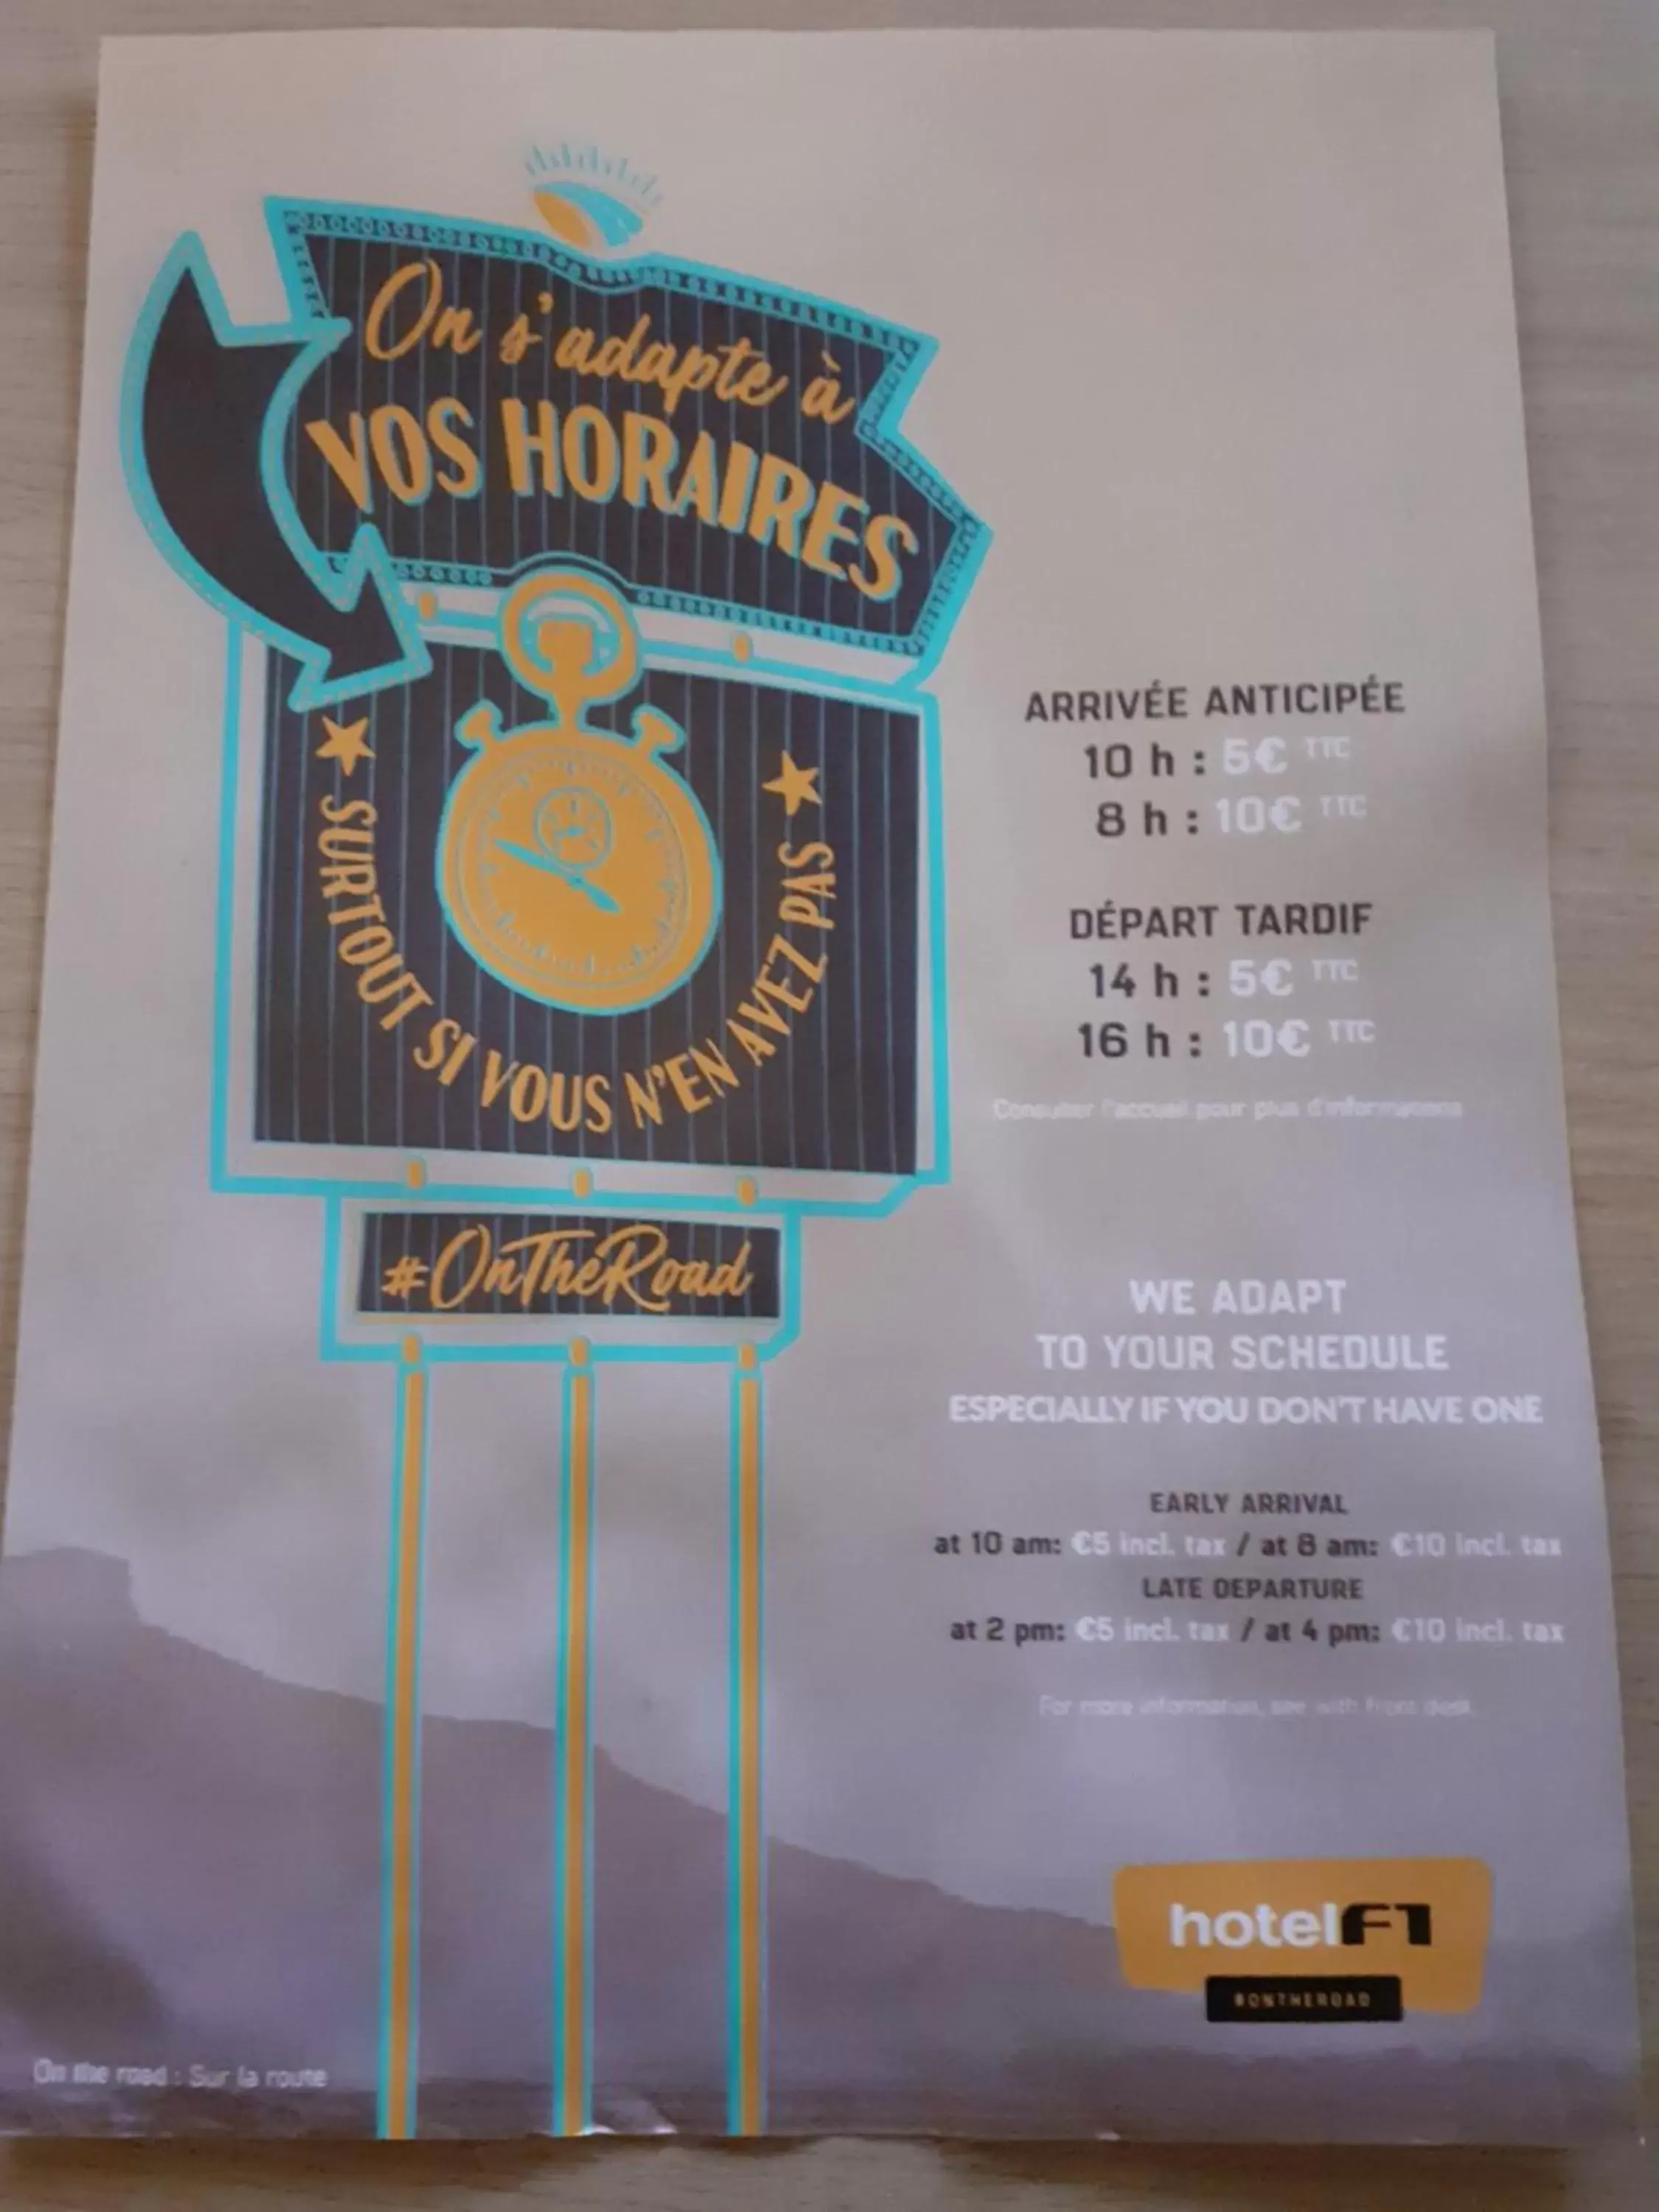 Certificate/Award in hotelF1 Saintes